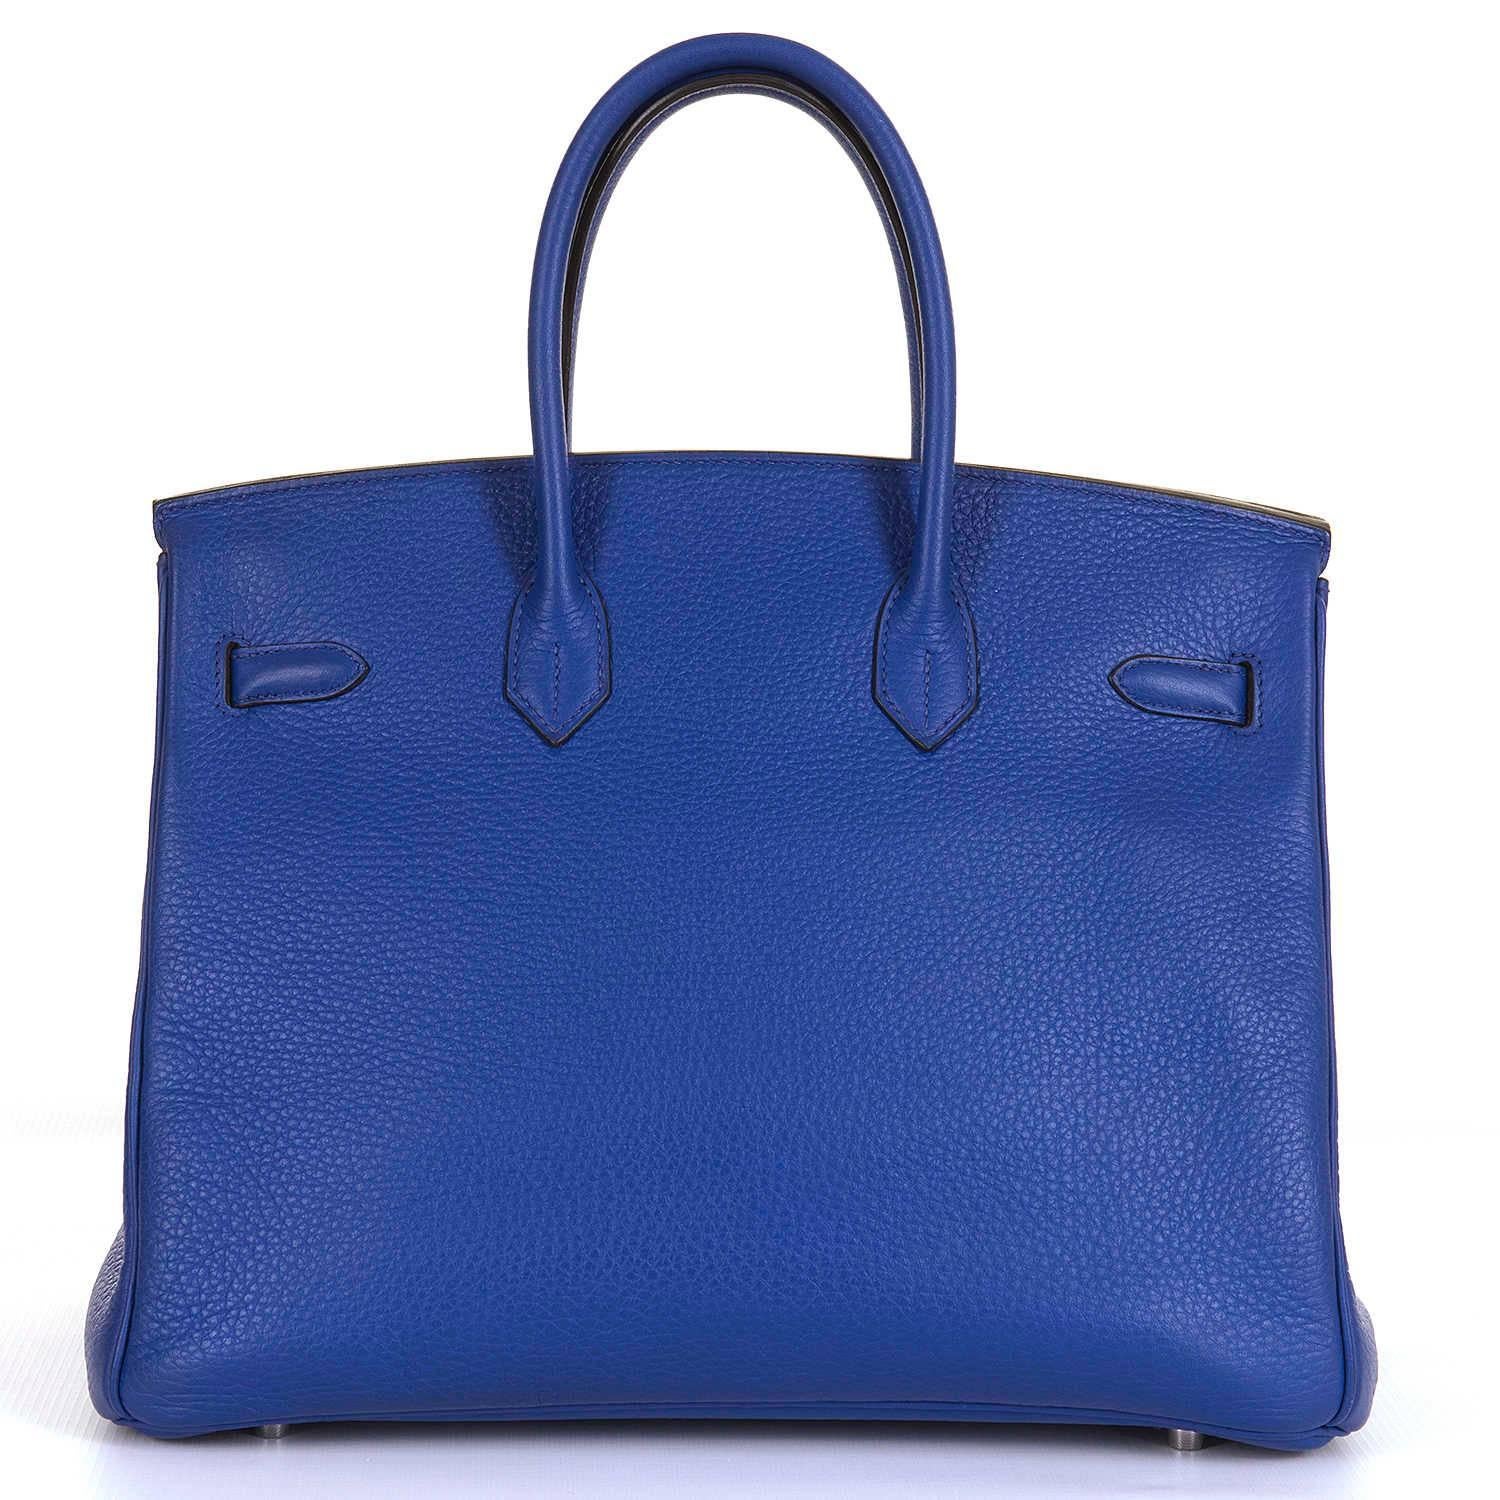 Blue PRISTINE Hermes 35cm 'Bleu Electrique' Togo Birkin Bag with Palladium Hardware